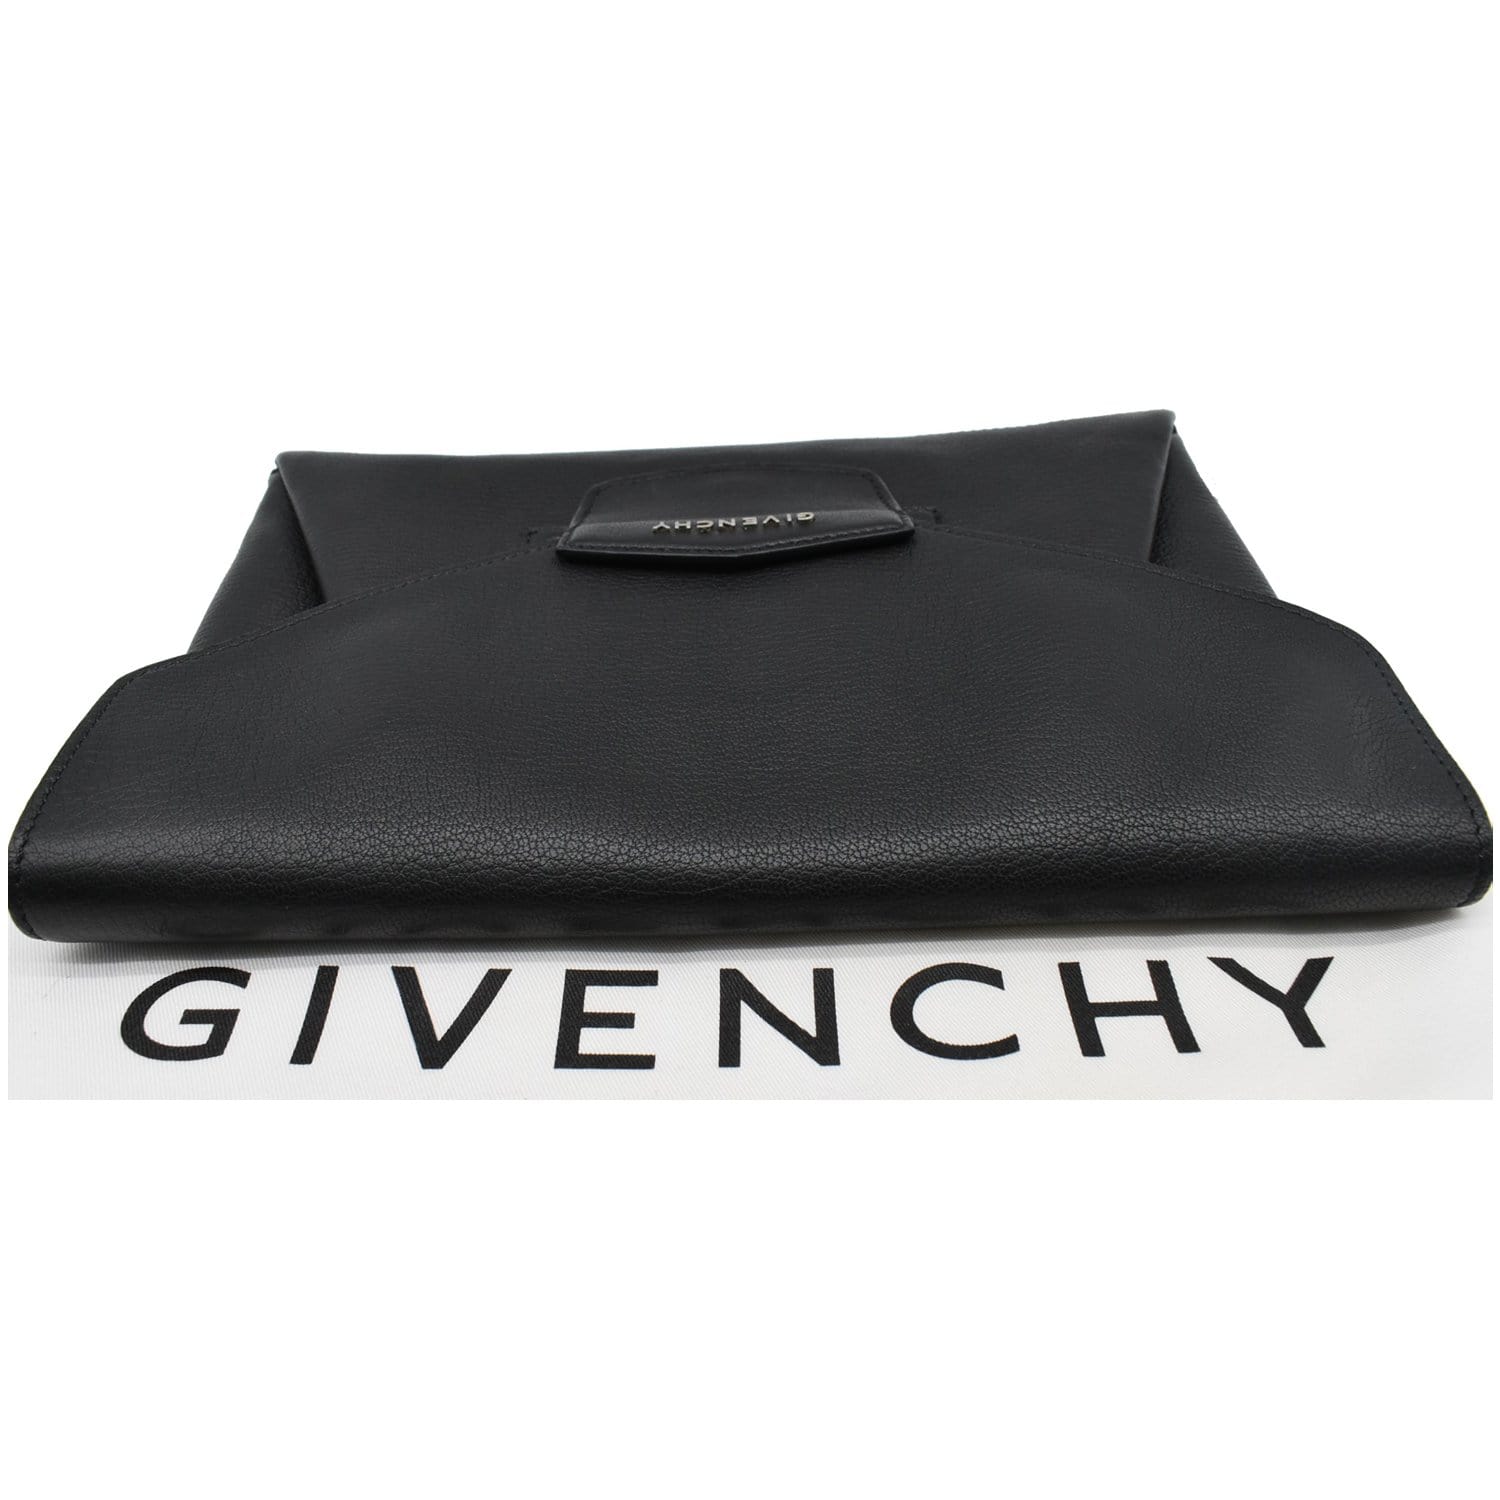 GIVENCHY Antigona Envelope Leather Clutch Black